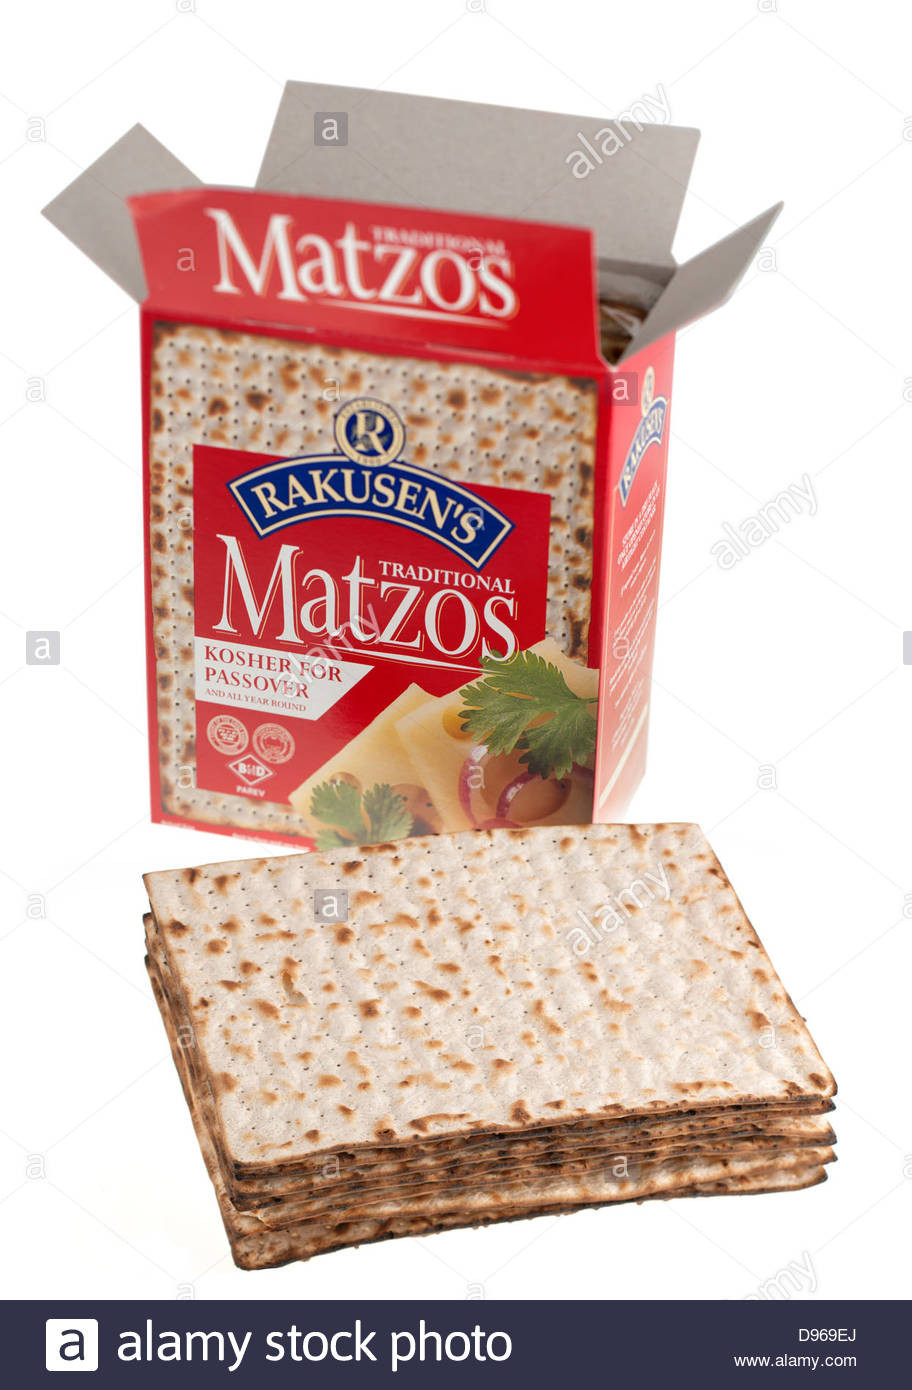 Passover Food Box
 Box of Kosher for Passover Rakusens traditional Matzos